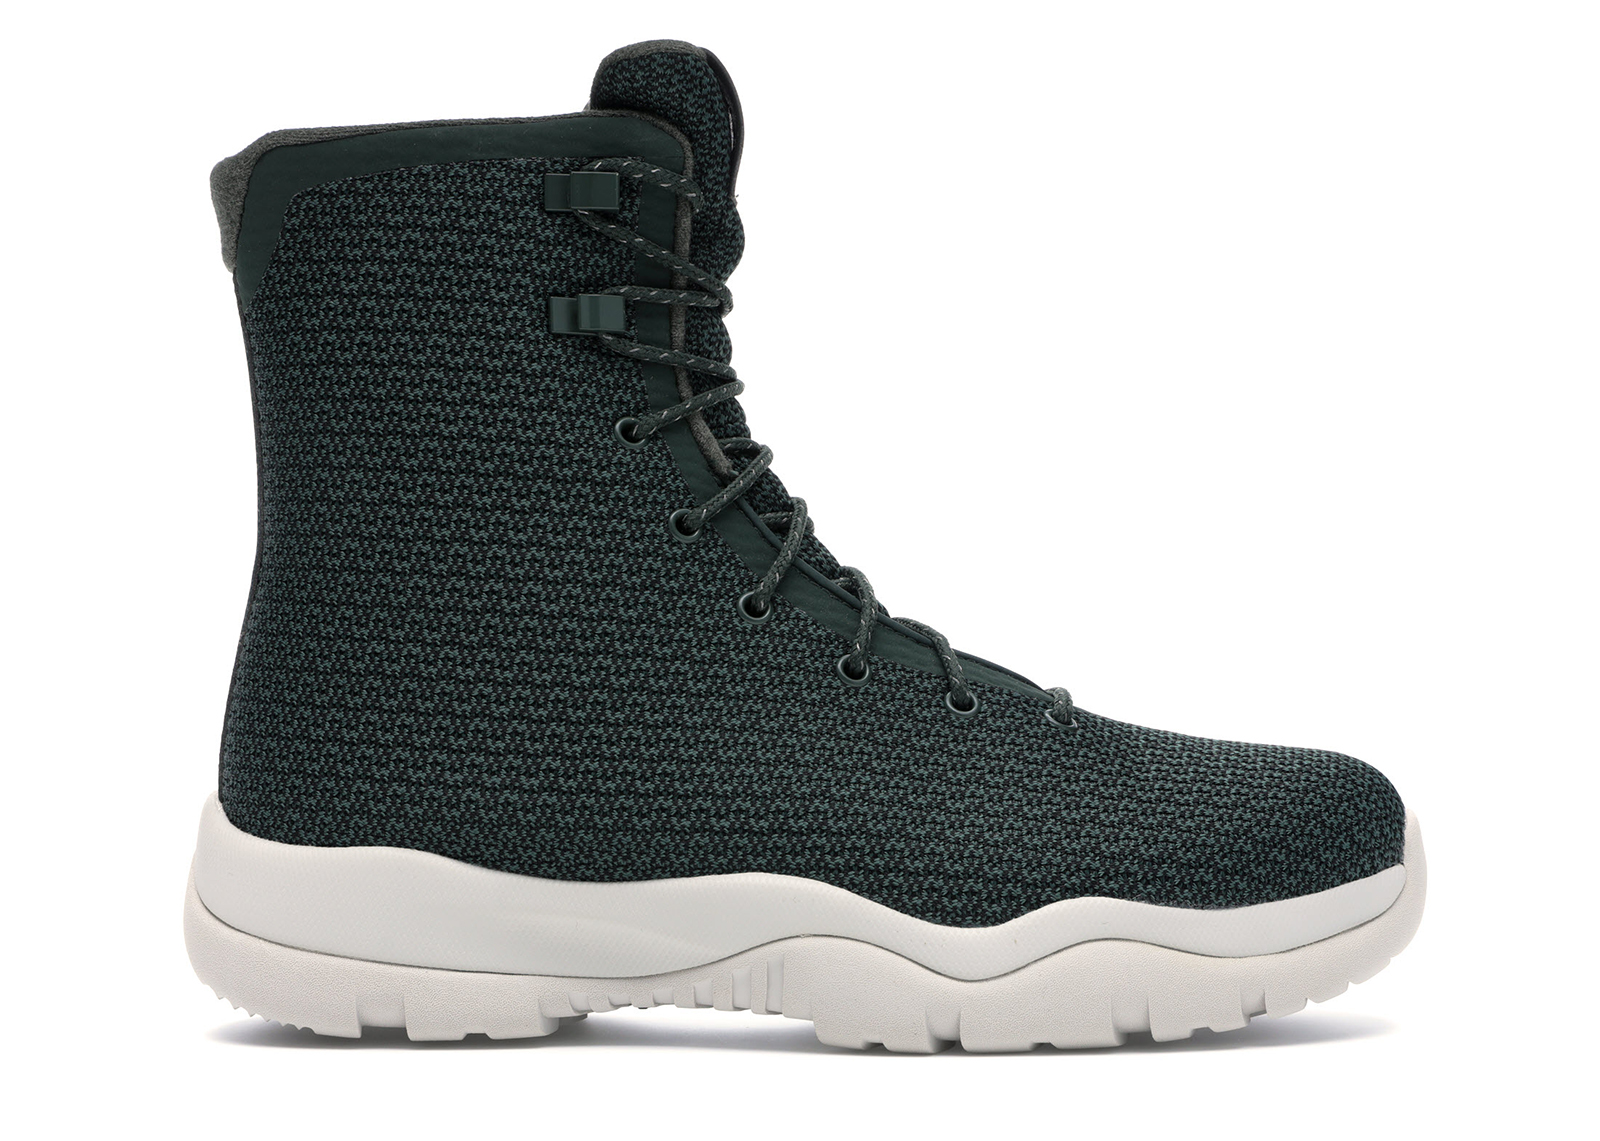 Jordan Future Boot Black Men's - 854554-002 - US